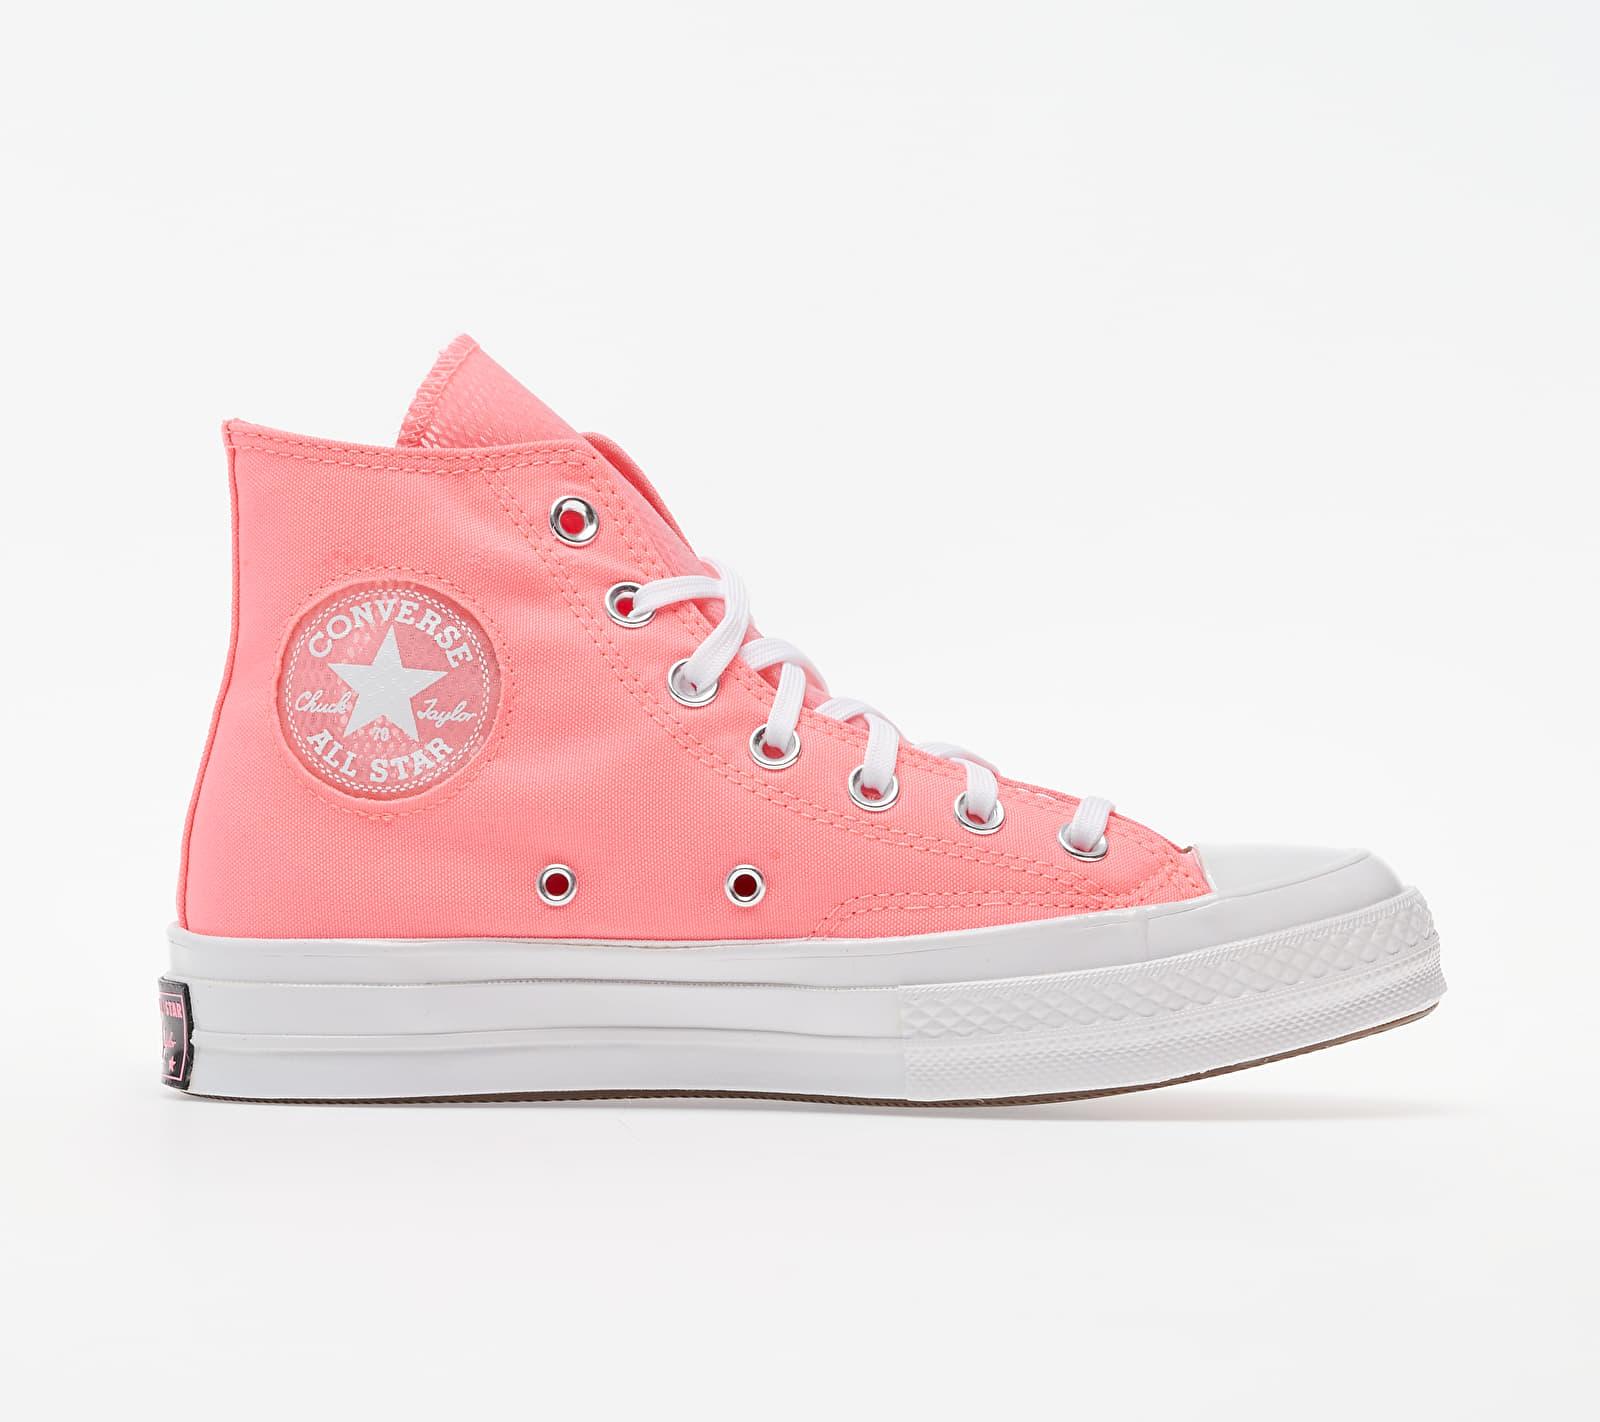 blush pink high top converse